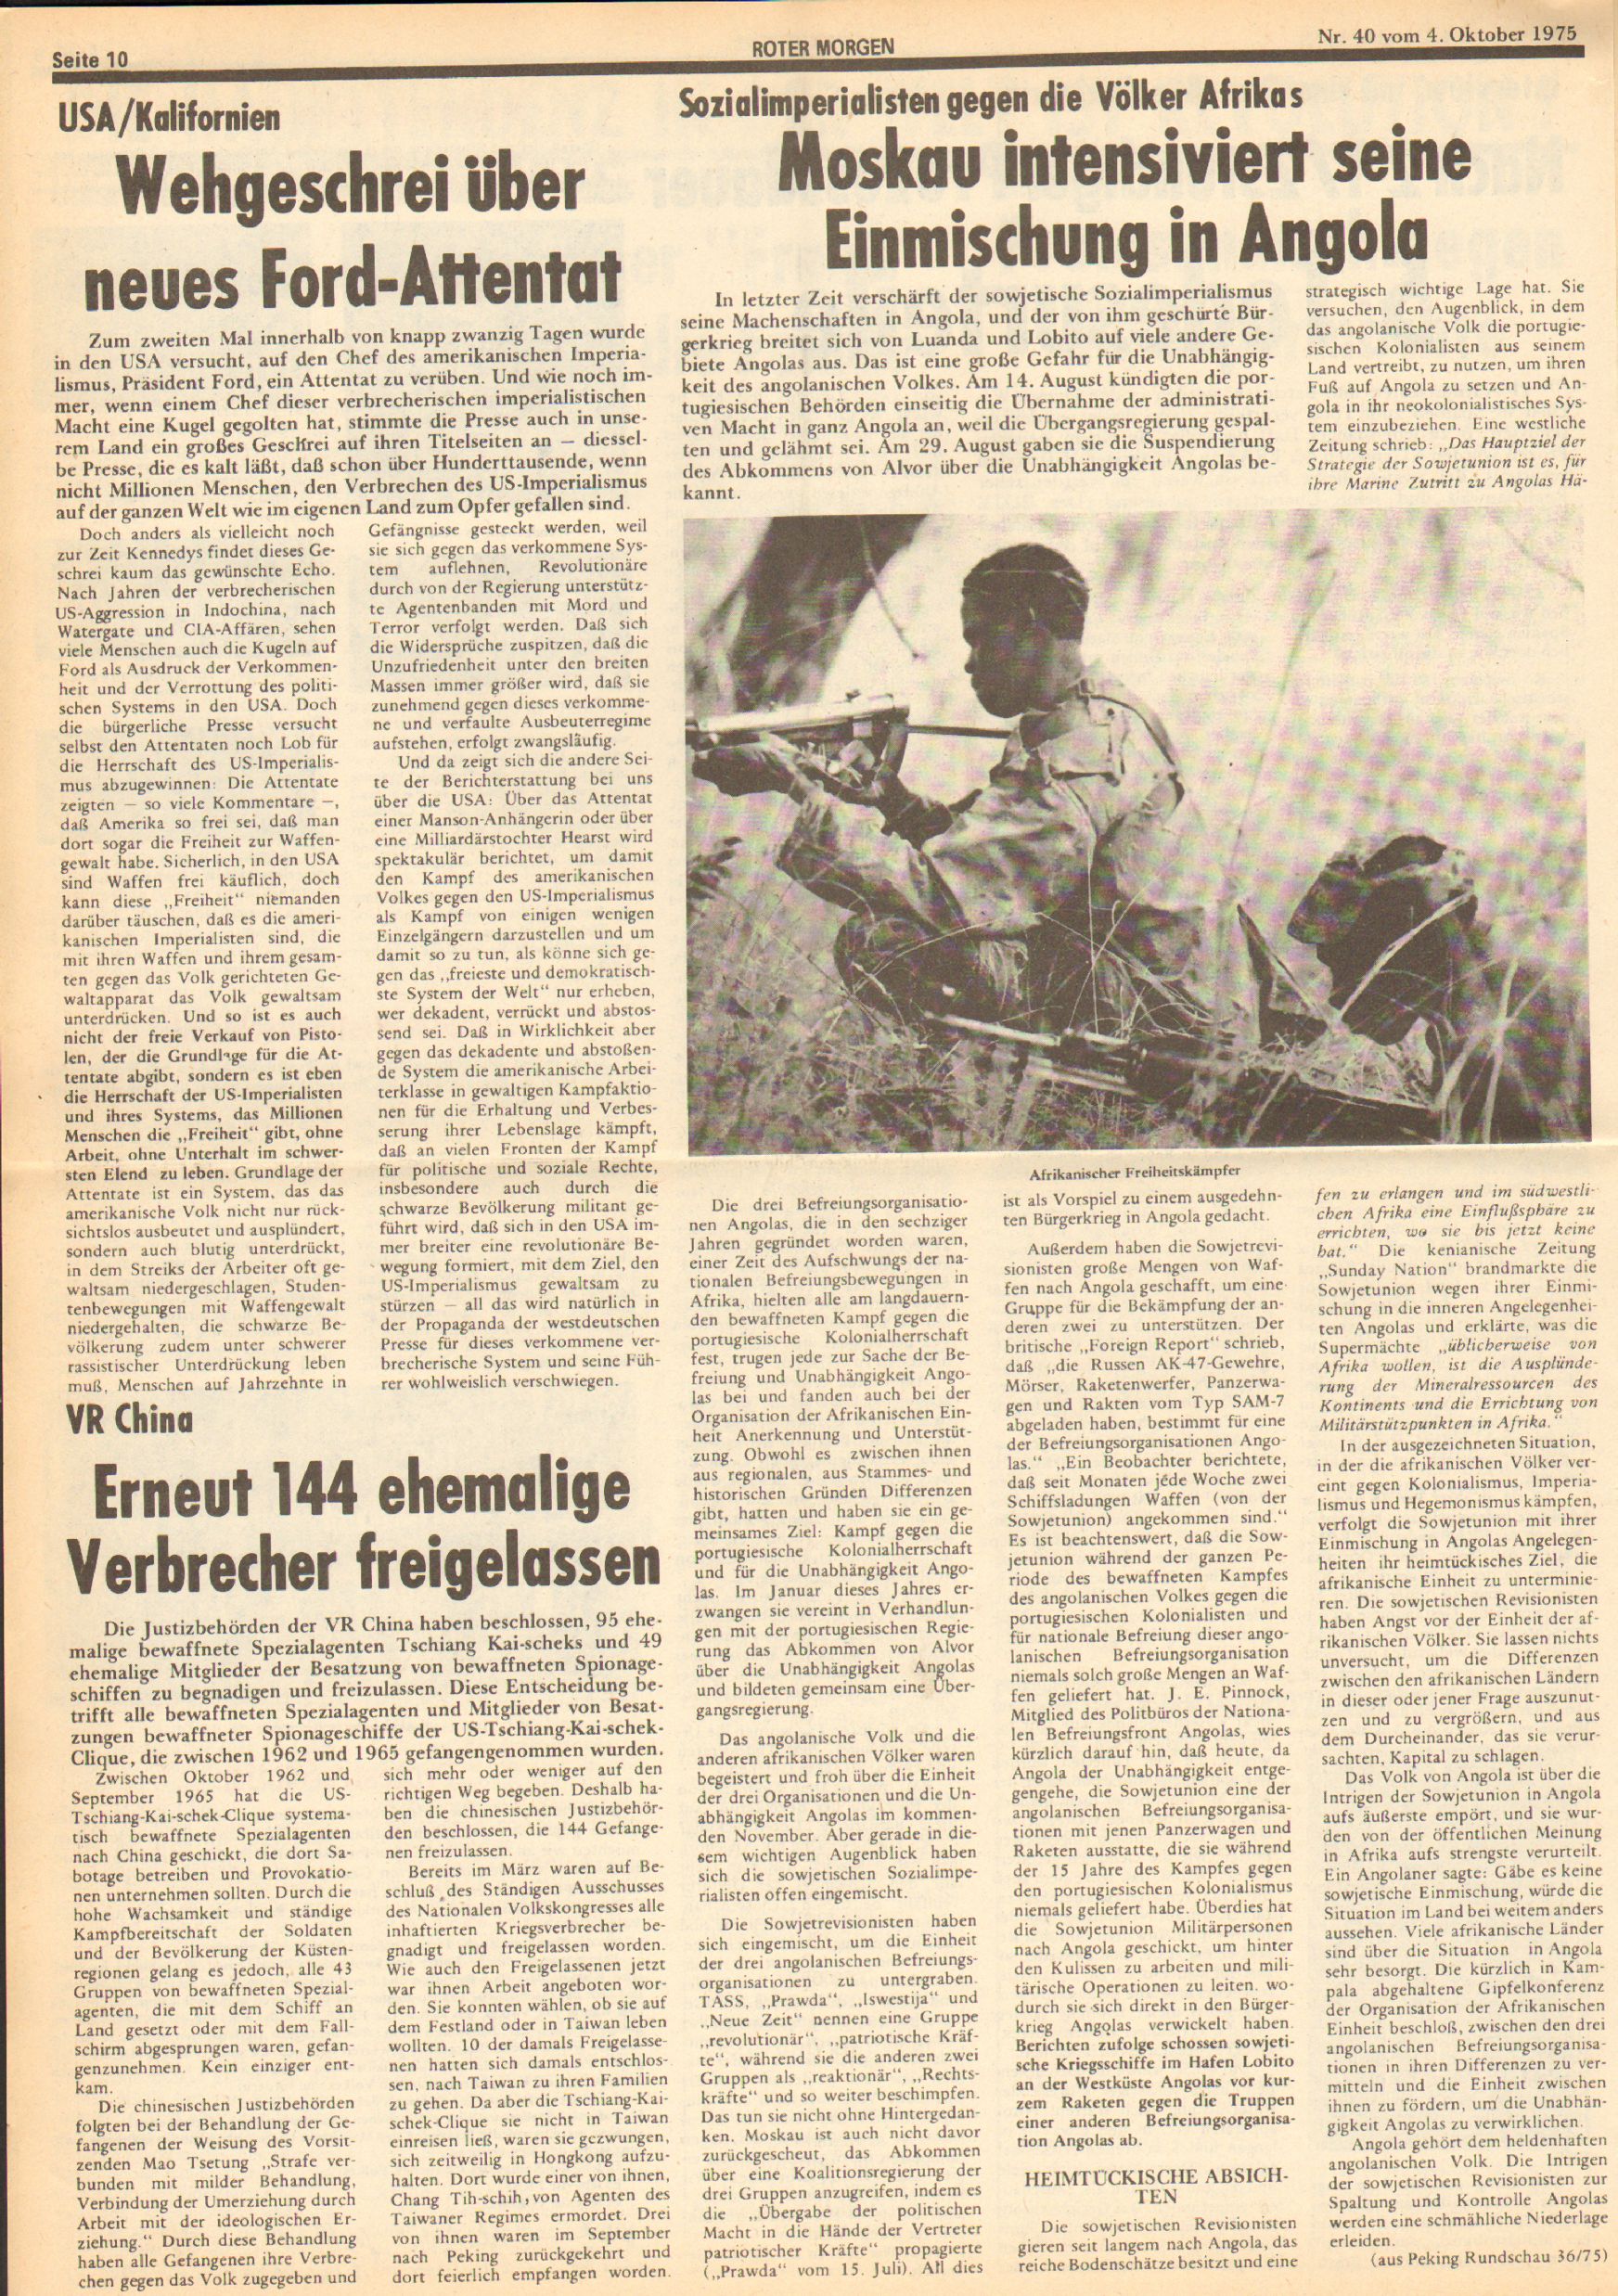 Roter Morgen, 9. Jg., 4. Oktober 1975, Nr. 40, Seite 10